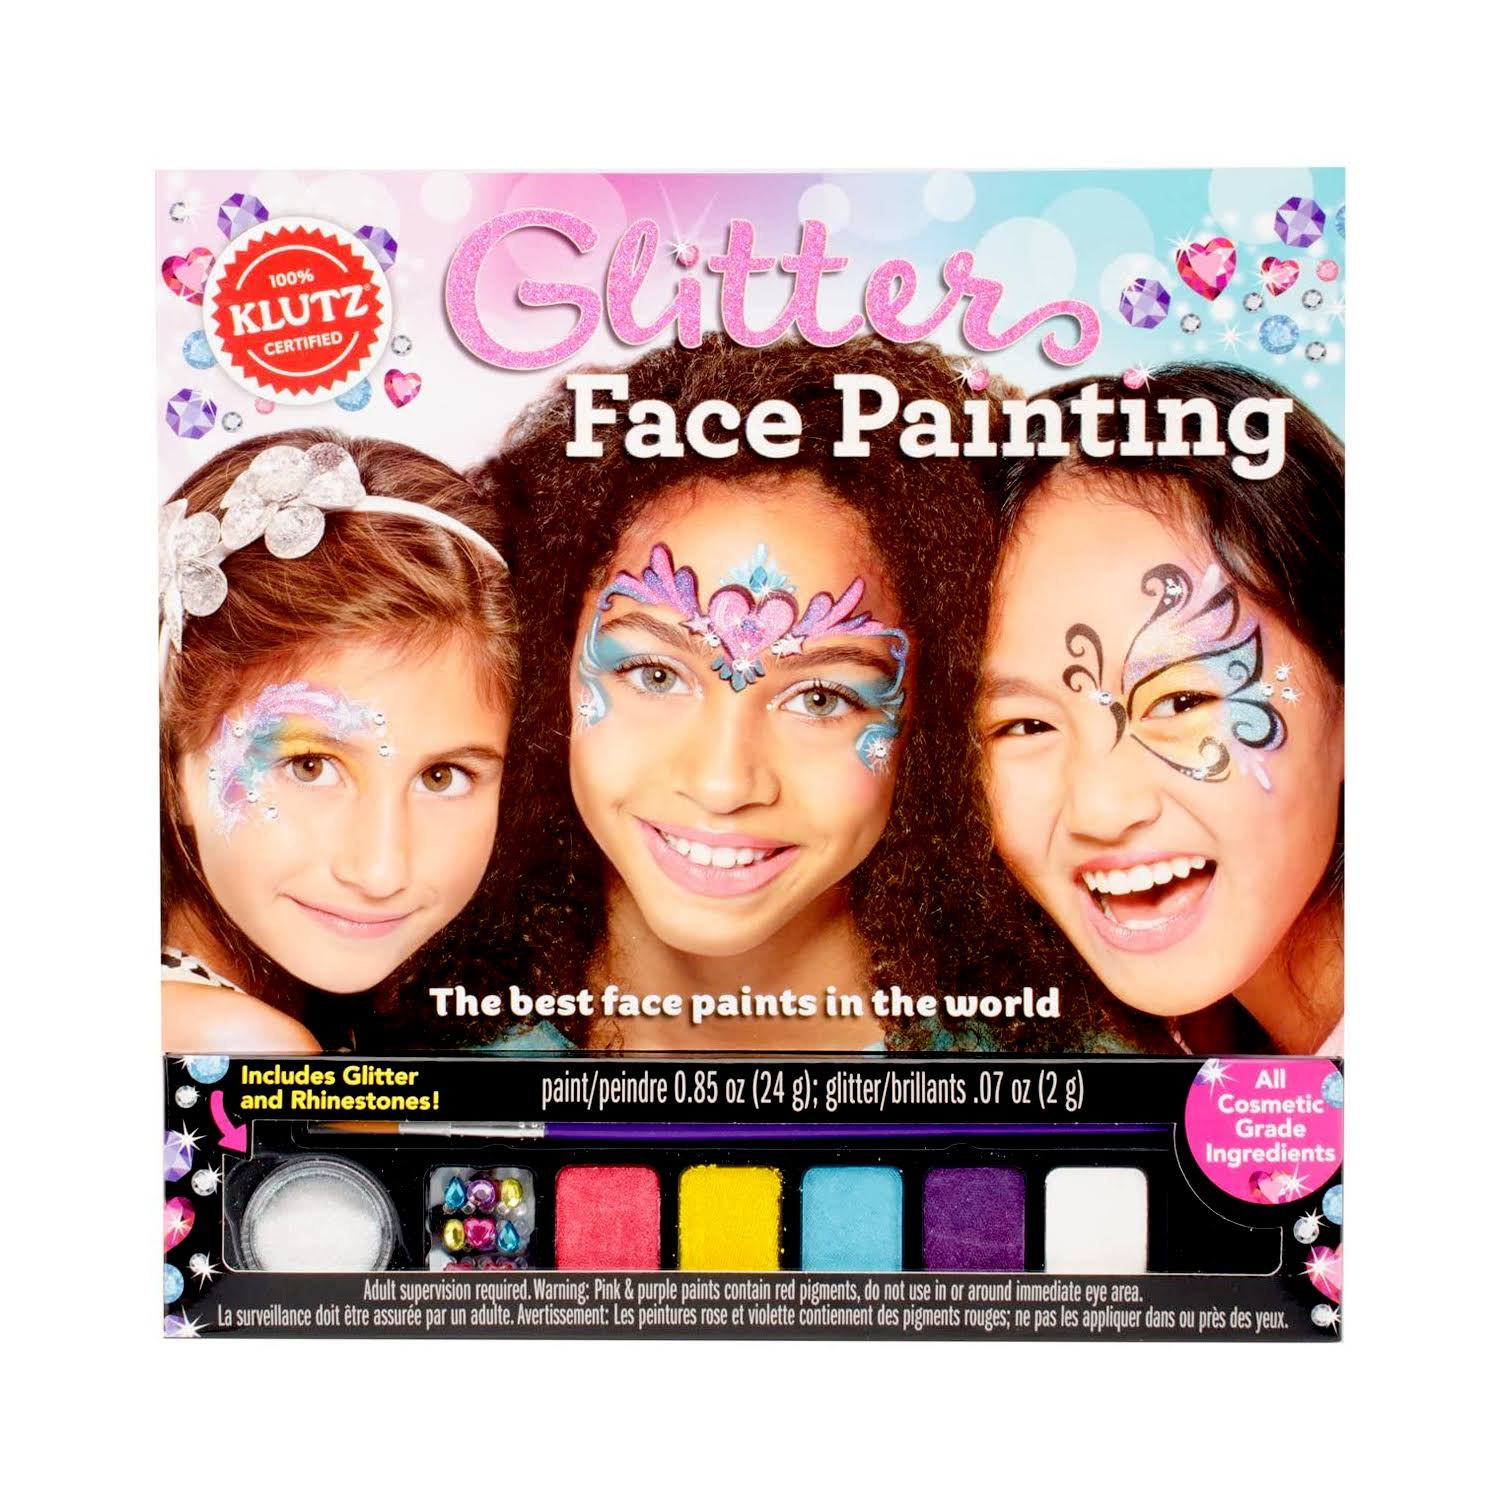 Klutz Glitter Face Painting Craft Kit